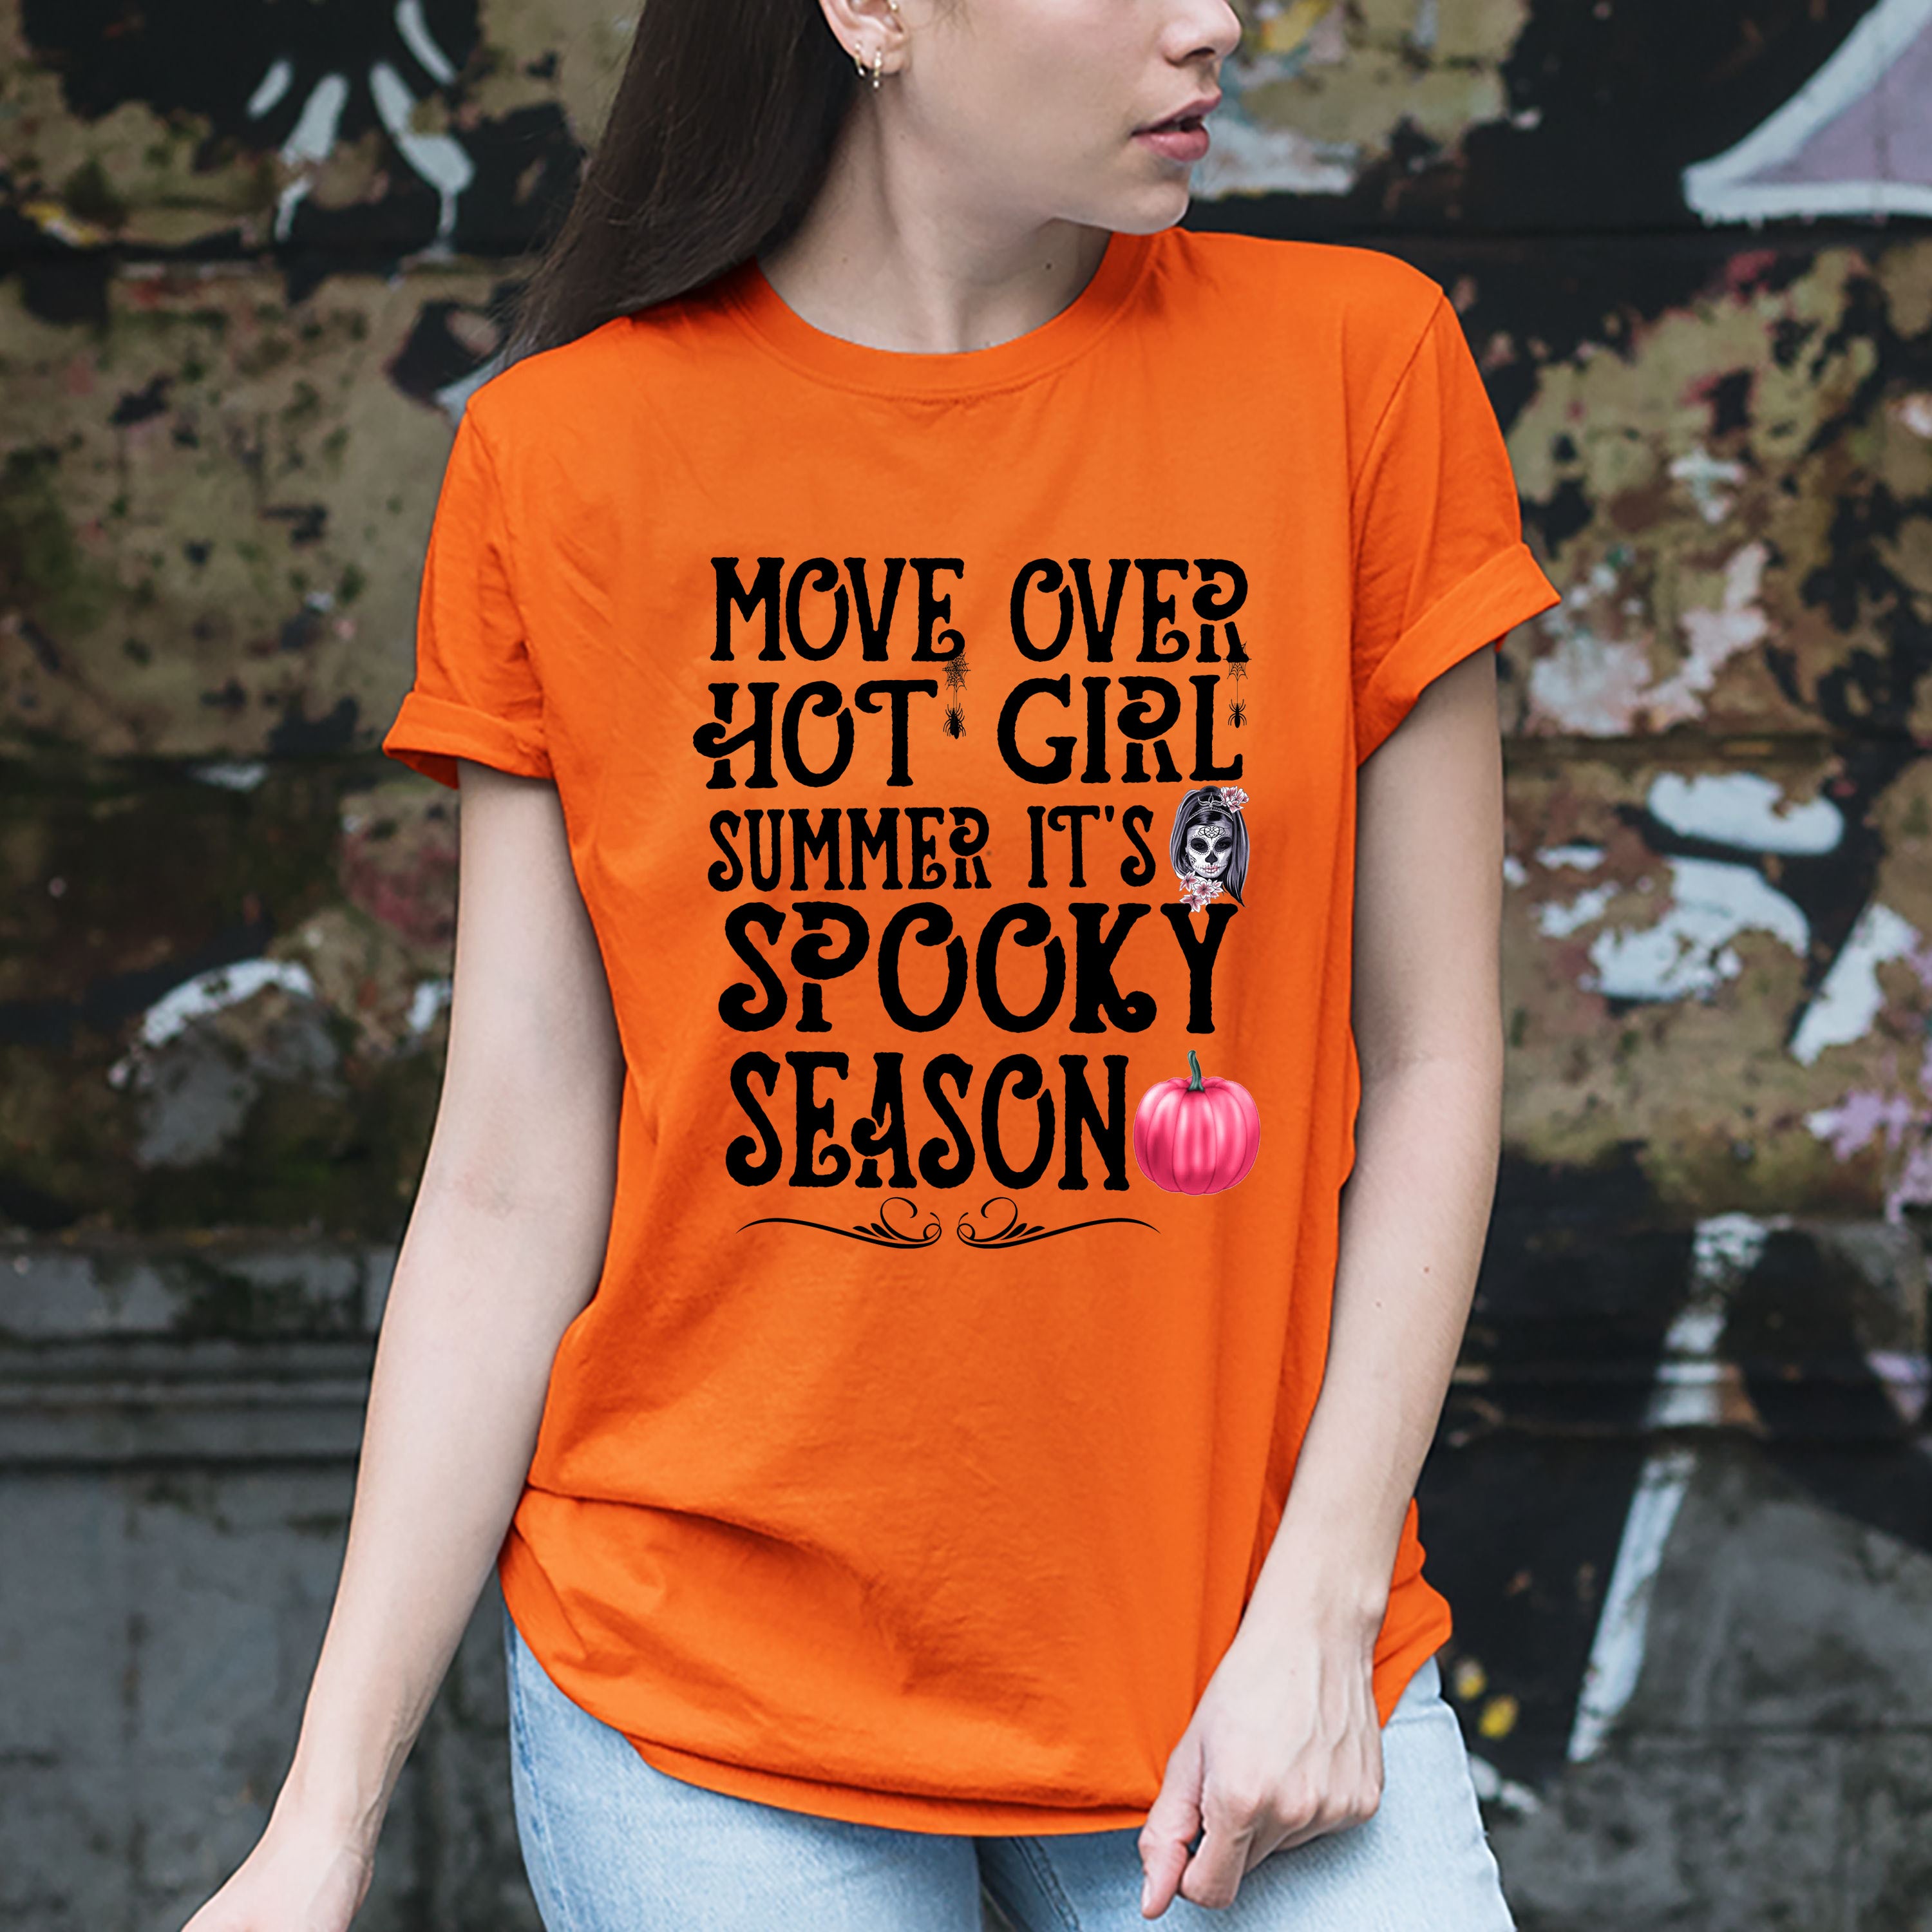 'Spooky Season''